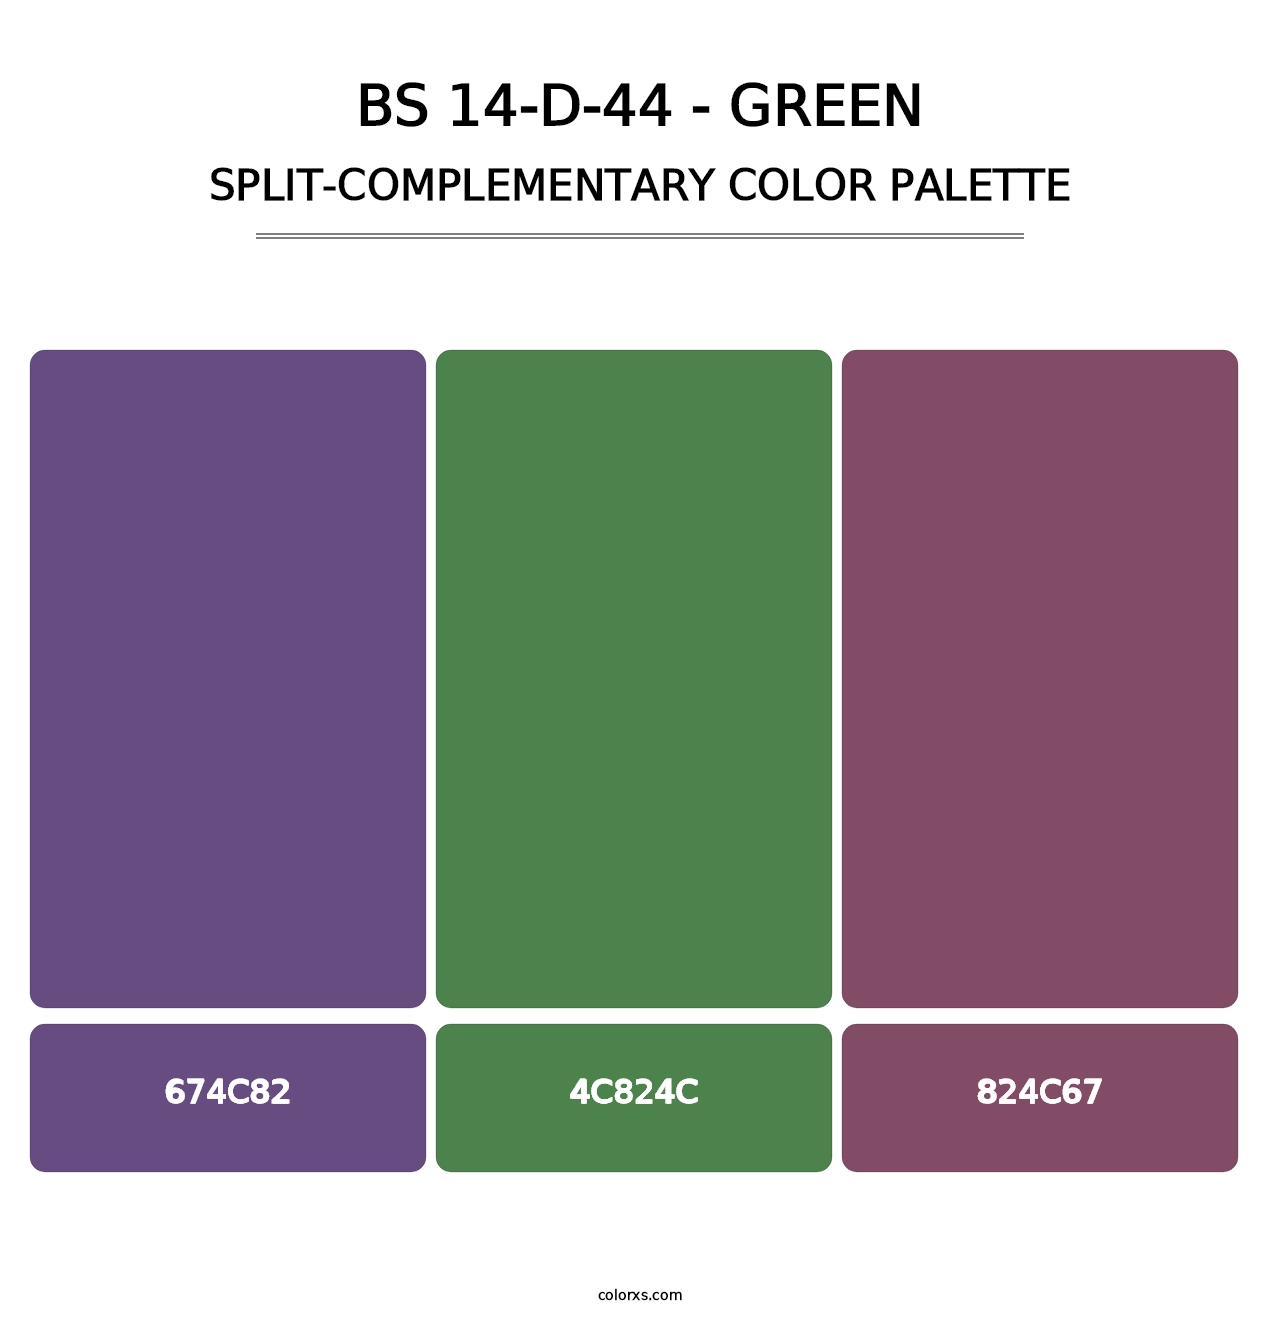 BS 14-D-44 - Green - Split-Complementary Color Palette